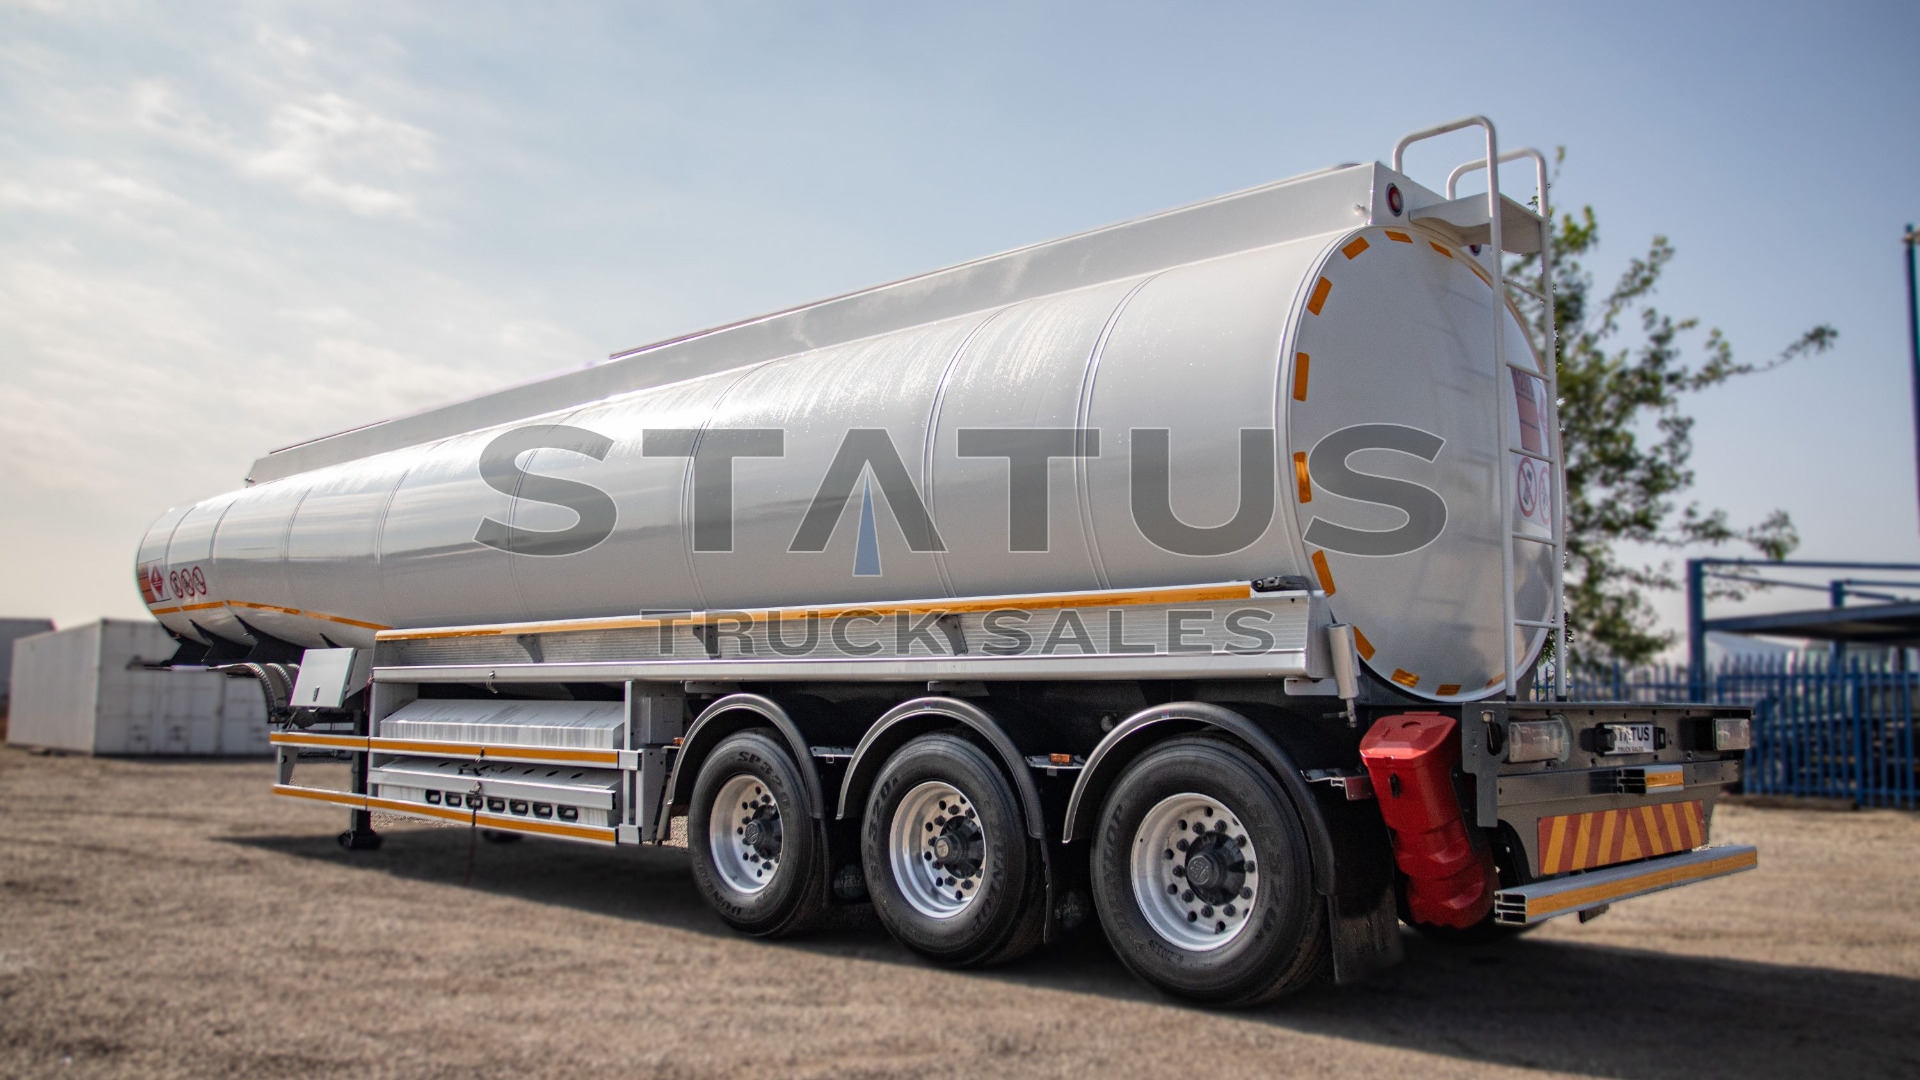 GRW Fuel tanker GRW 50 000L Tri Axle  fuel tanker 2014 for sale by Status Truck Sales | Truck & Trailer Marketplace